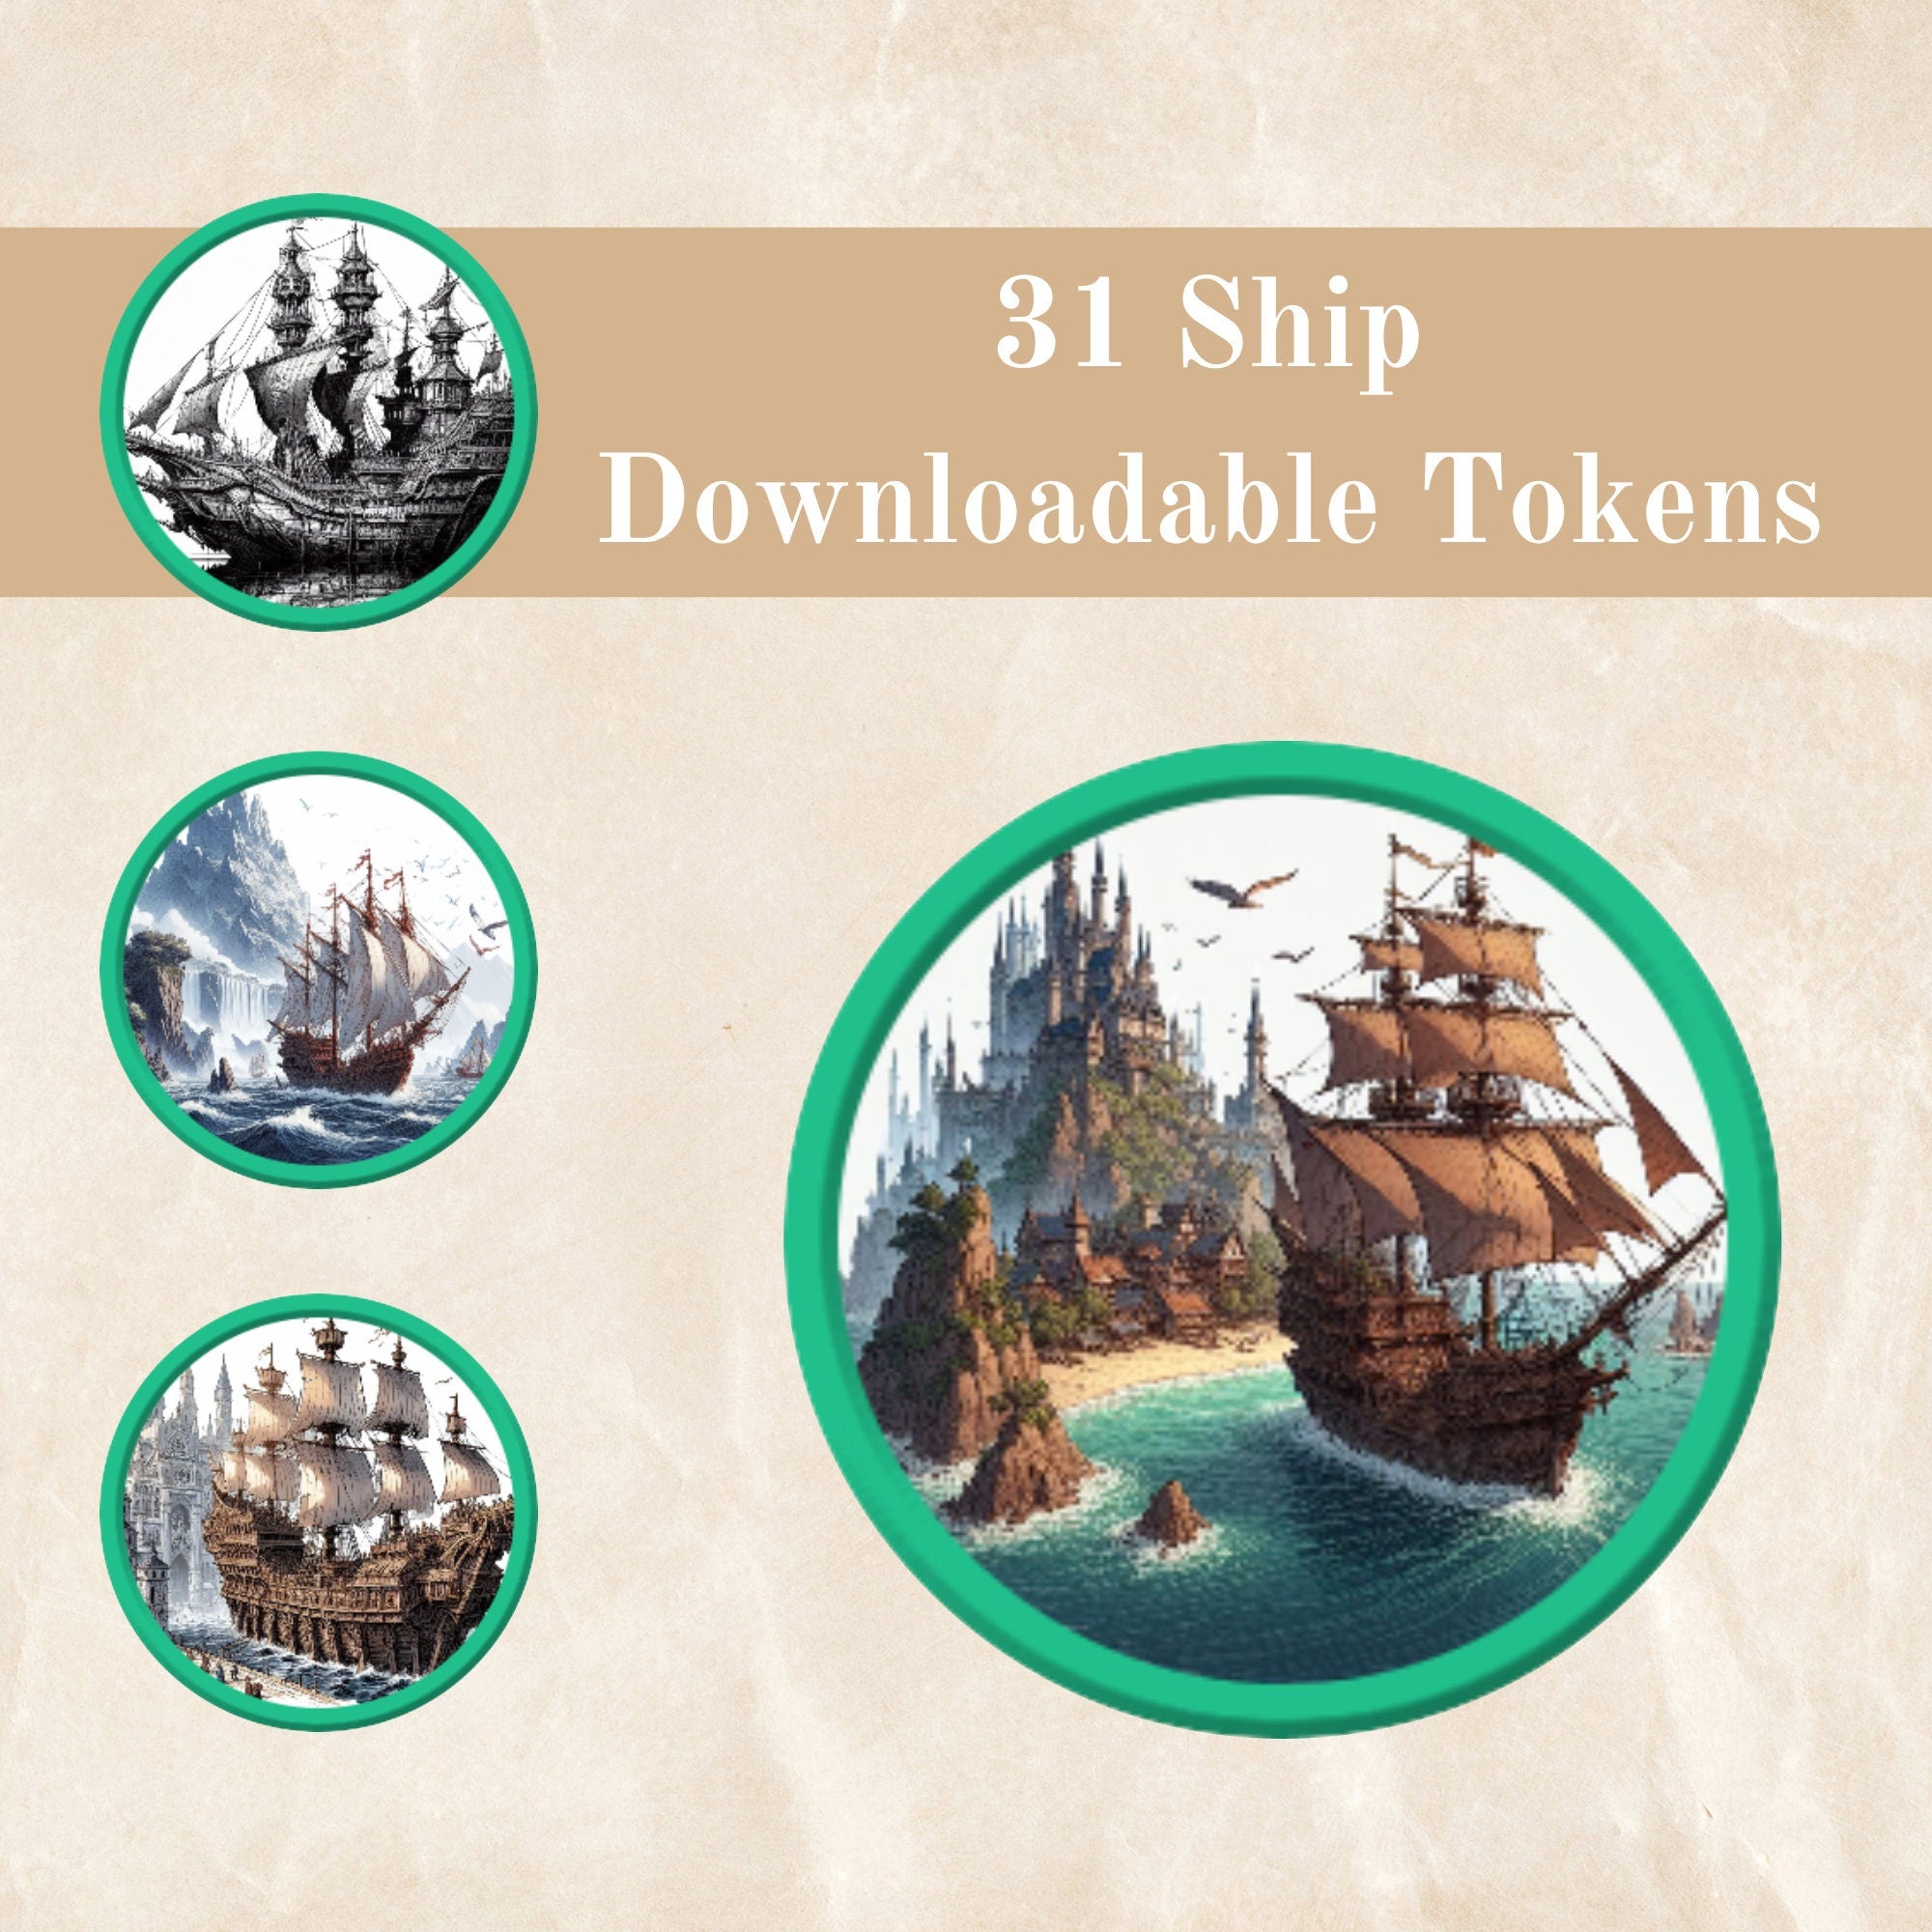 31 DnD Ship Tokens - Downloadable | Dungeons & Dragons Token | Roll20 | Foundry VTT | Fantasy Grounds | Battle Map Tokens - MysteryDiceGoblins